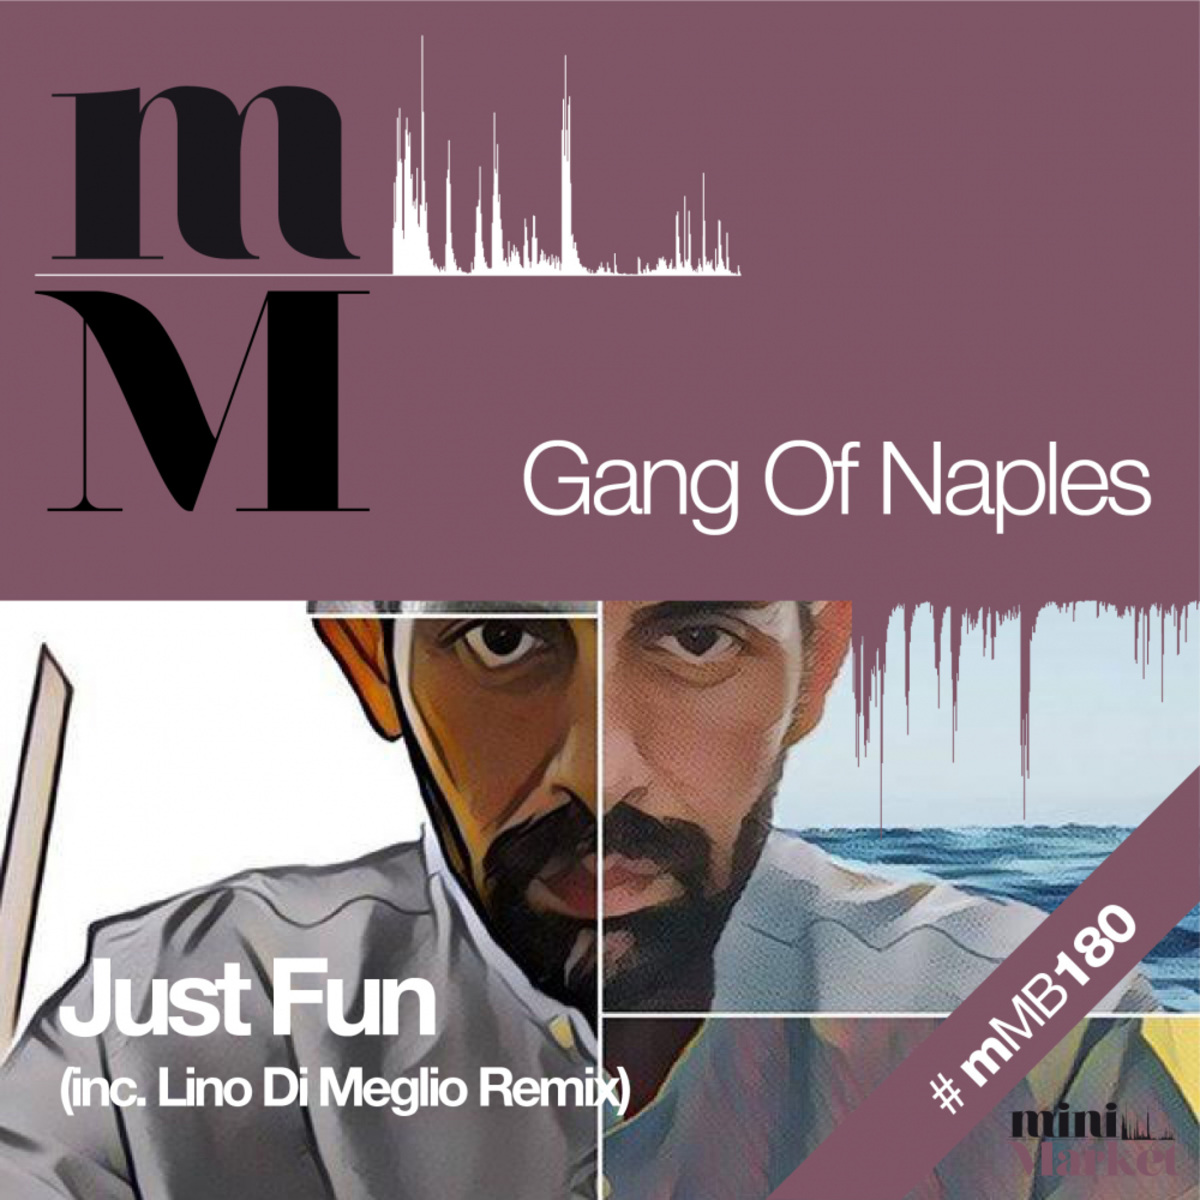 Gangs of Naples - Just Fun / miniMarket